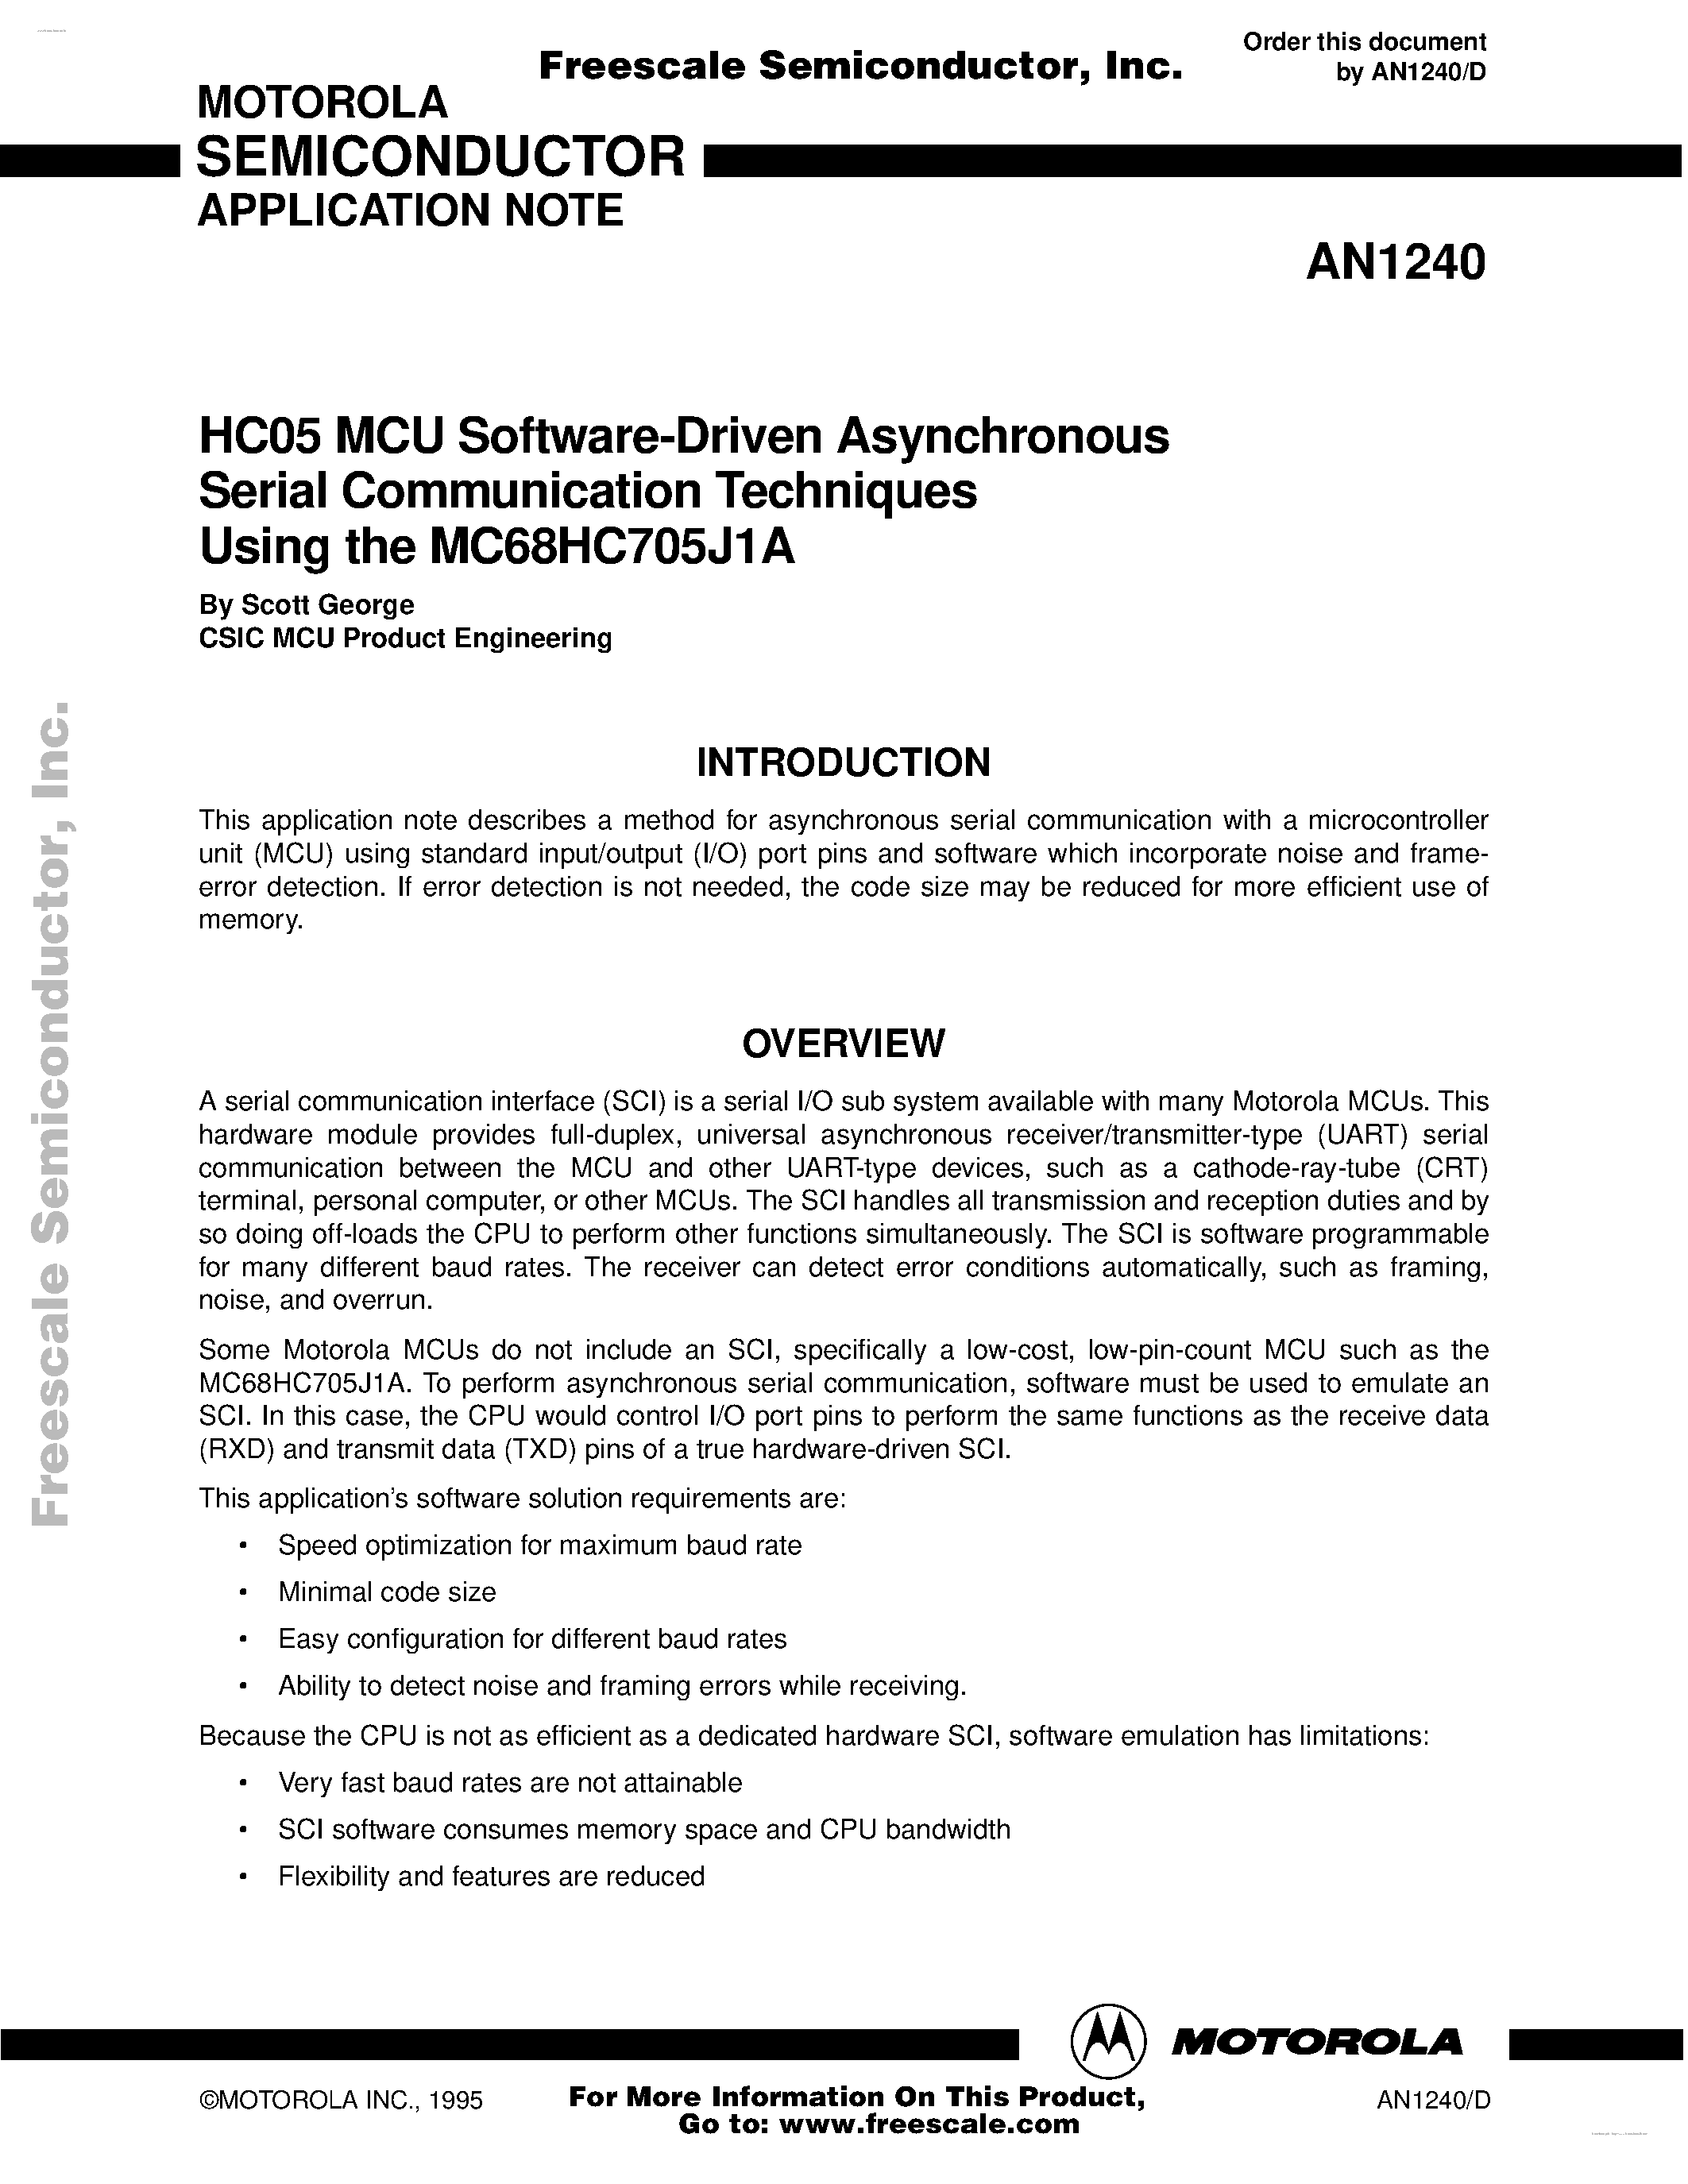 Datasheet AN1240 - HC05 MCU Software-Driven Asynchronous Serial Communication Techniques Using the MC68HC705J1A page 1